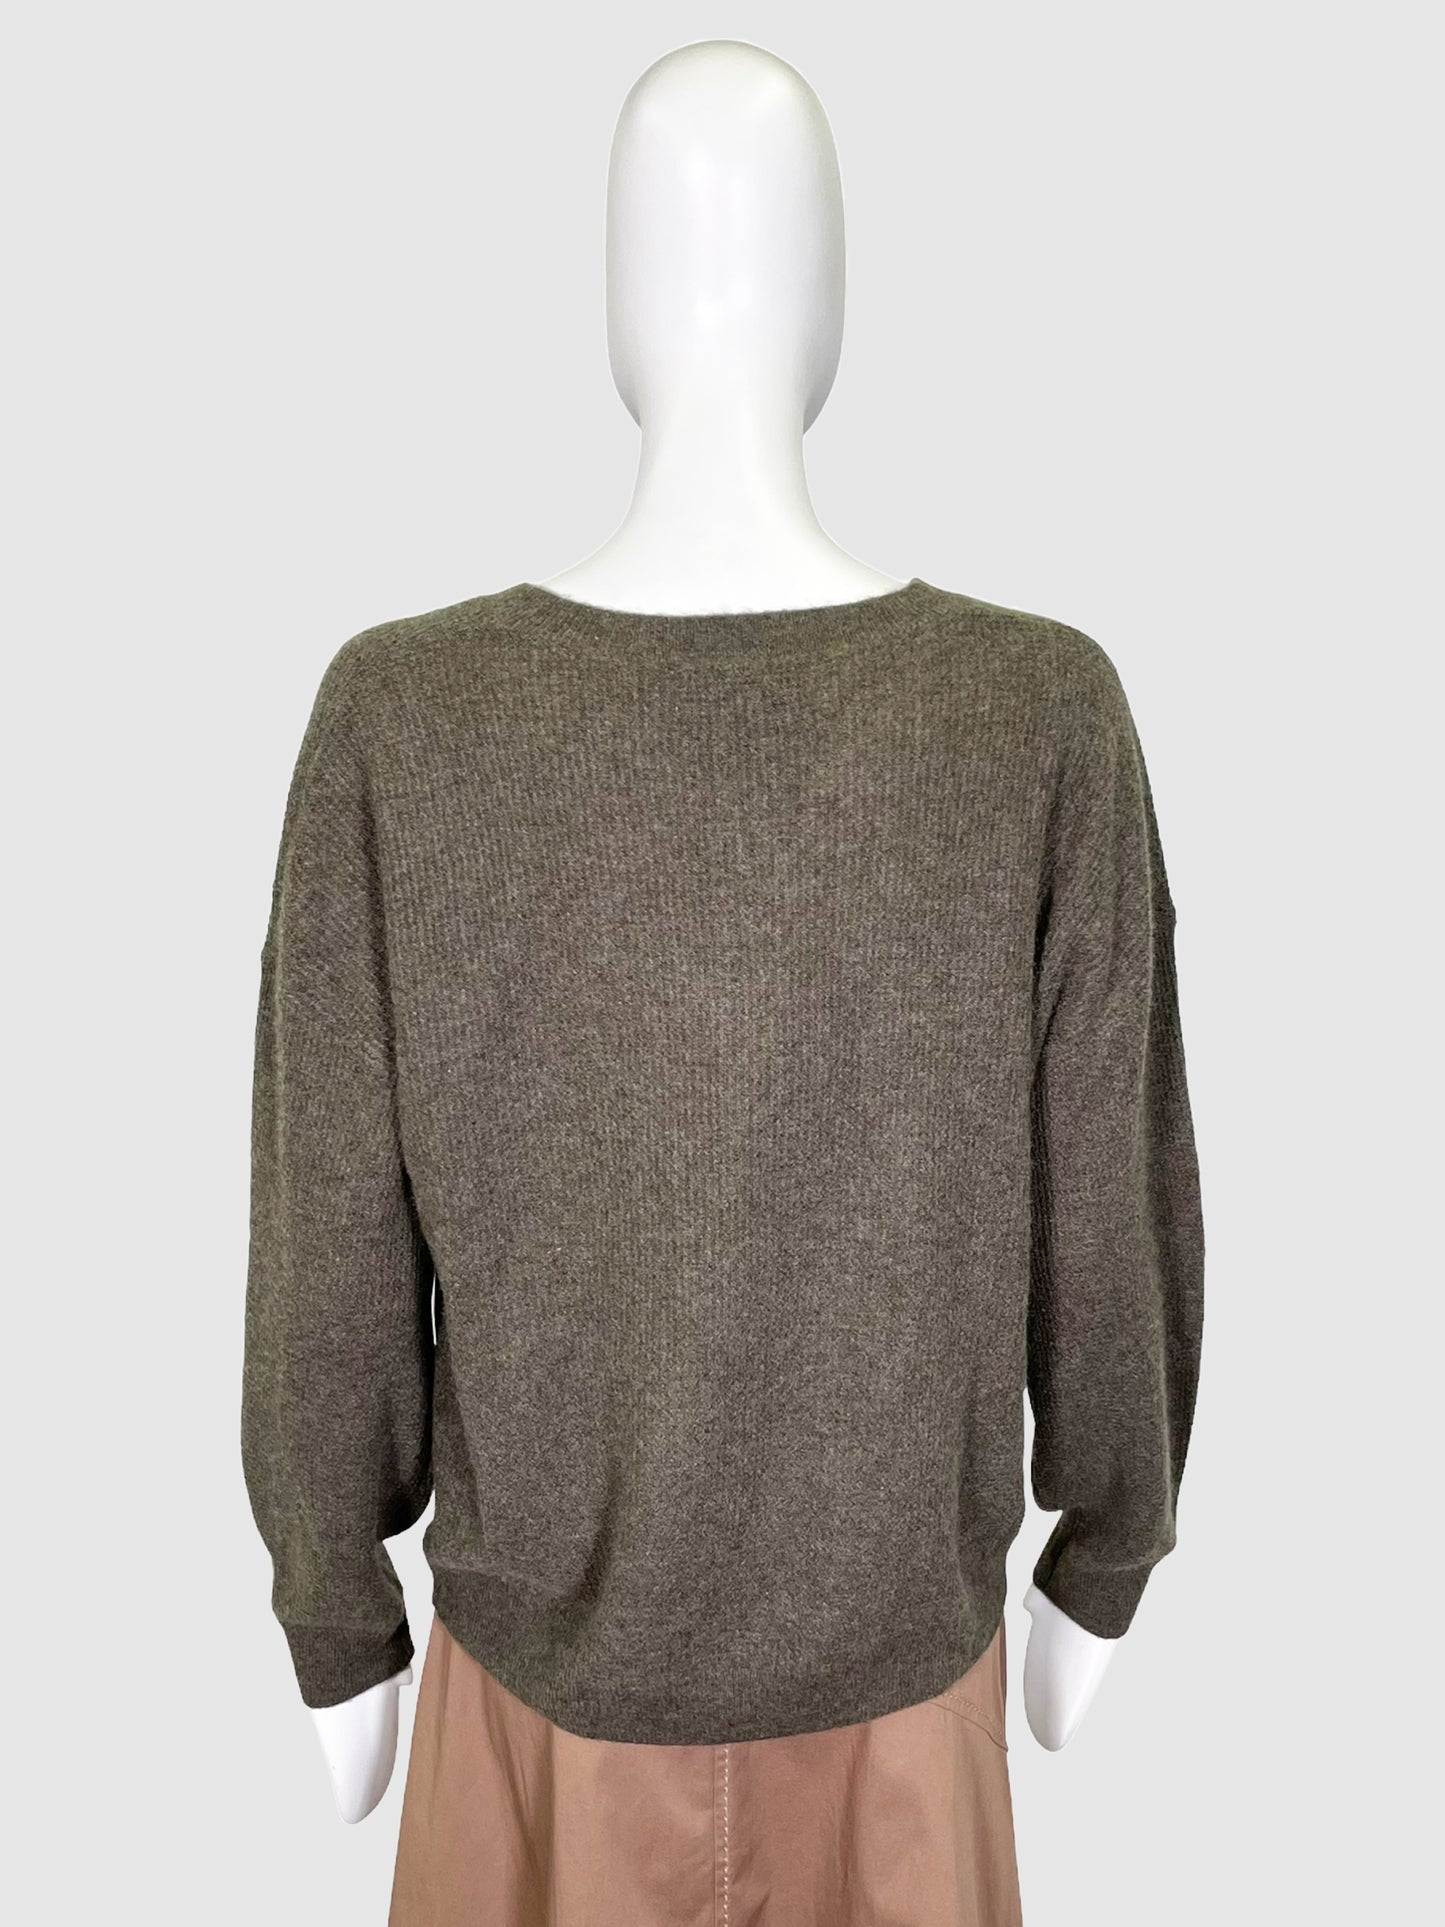 Magaschoni Cashmere Sweater - Size M